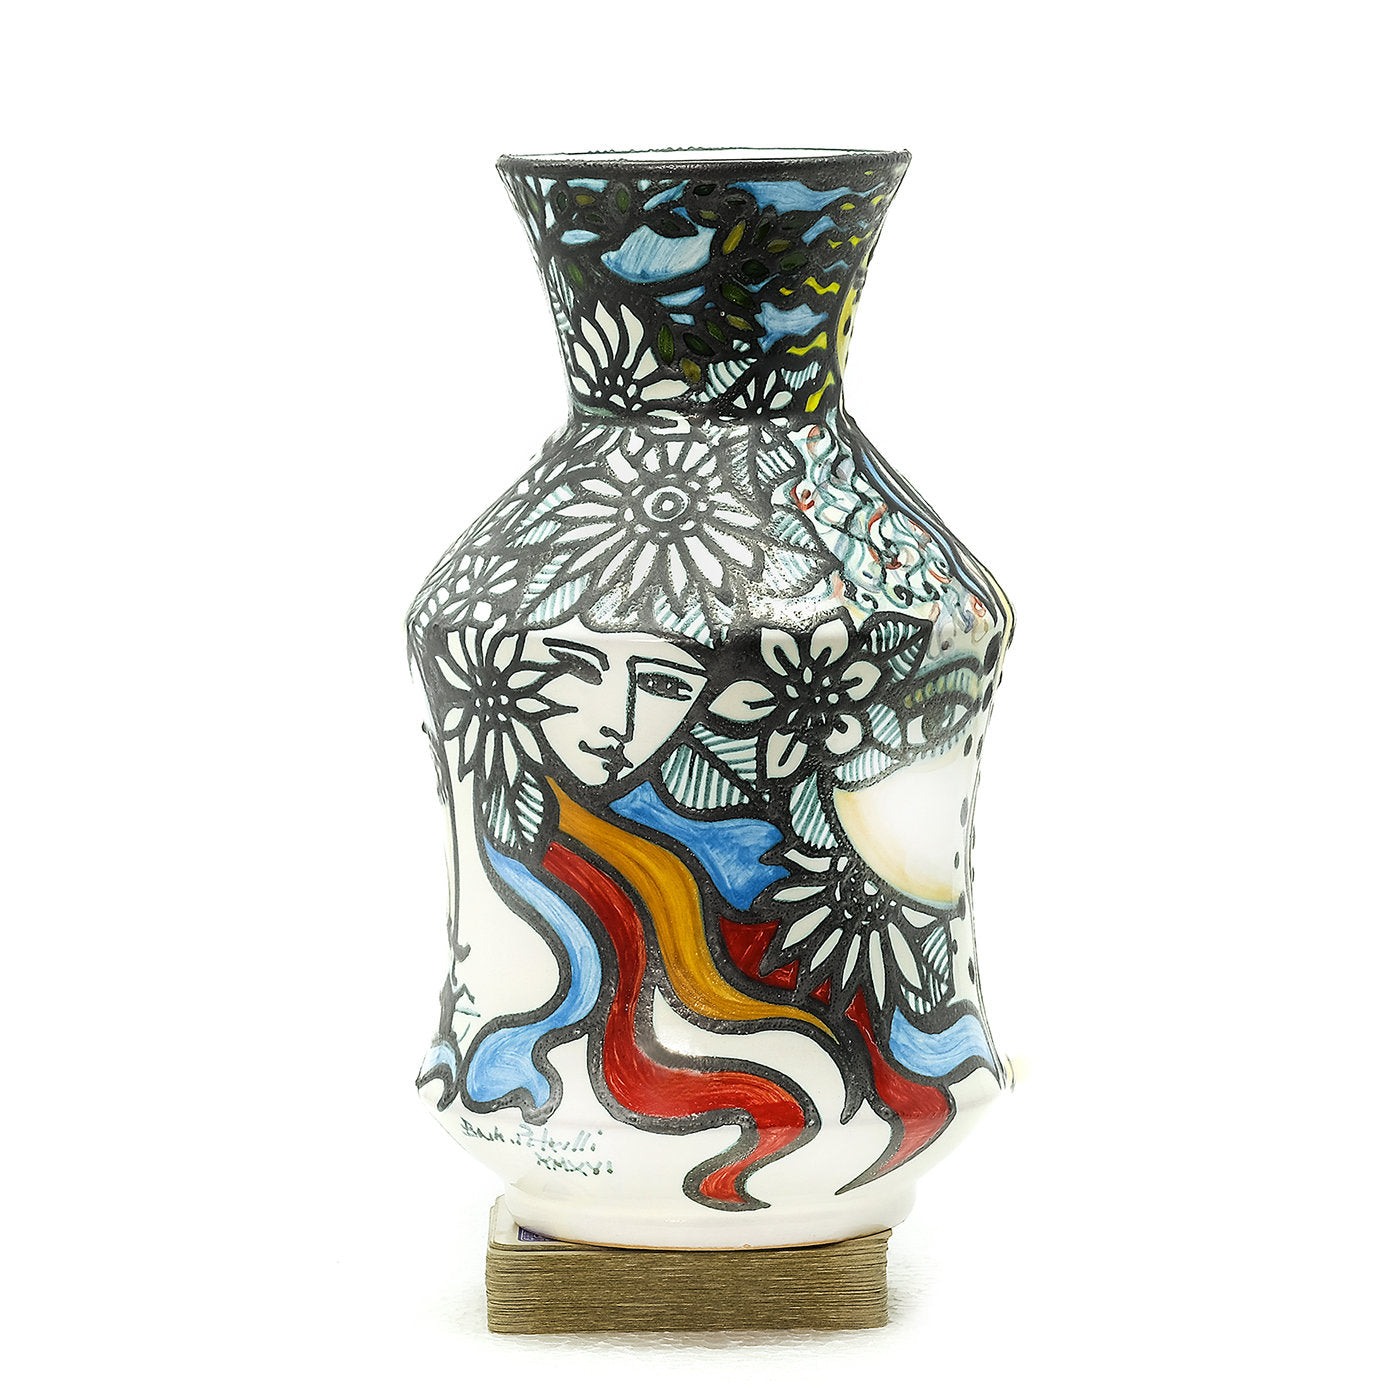 Abstract Ceramic Flower Vase #1 - Alternative view 1